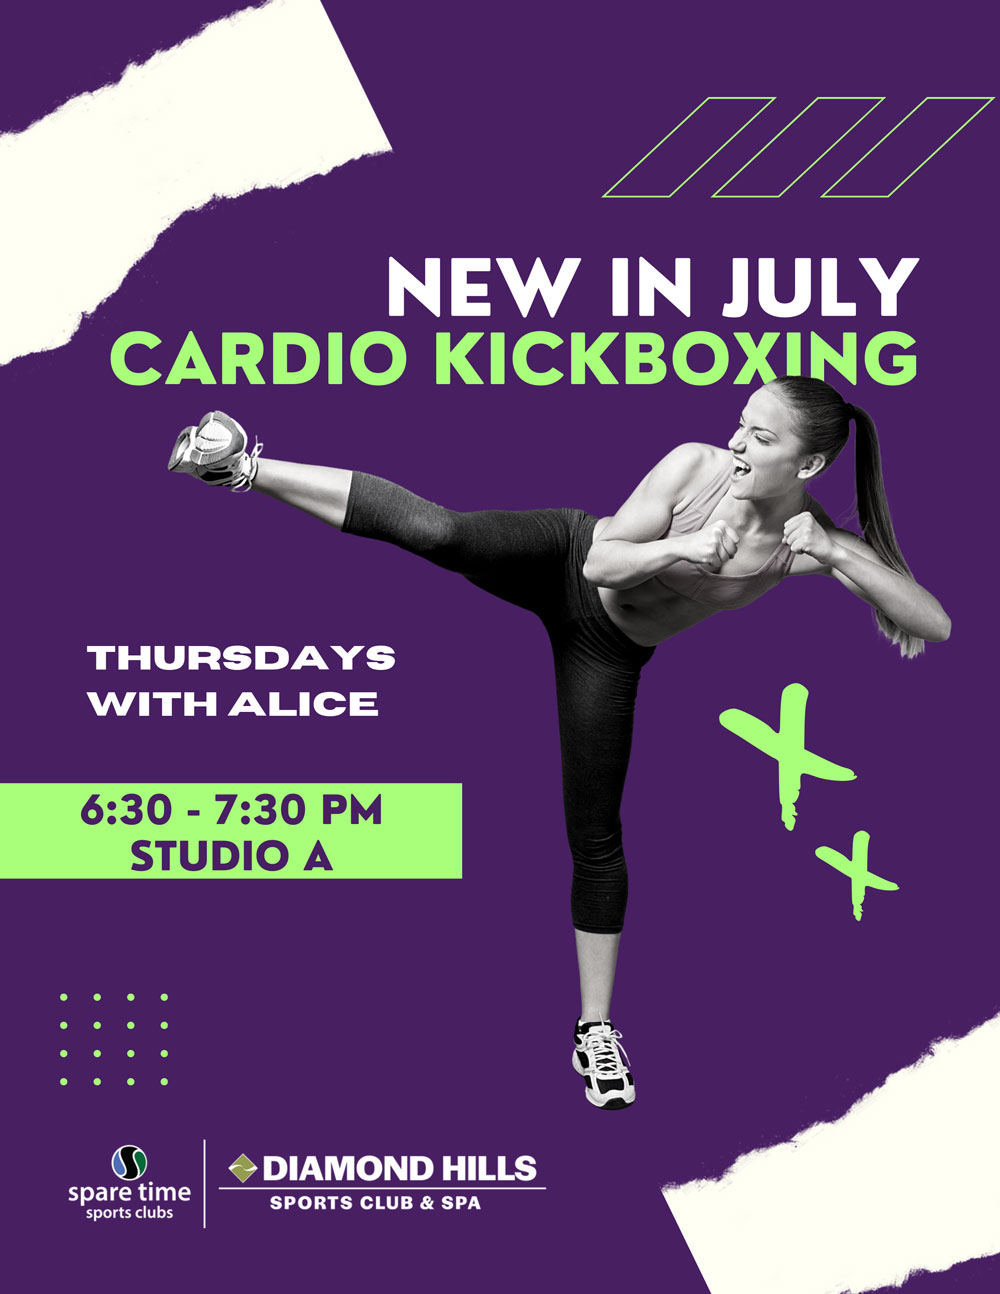 Cardio kickboxing new in july